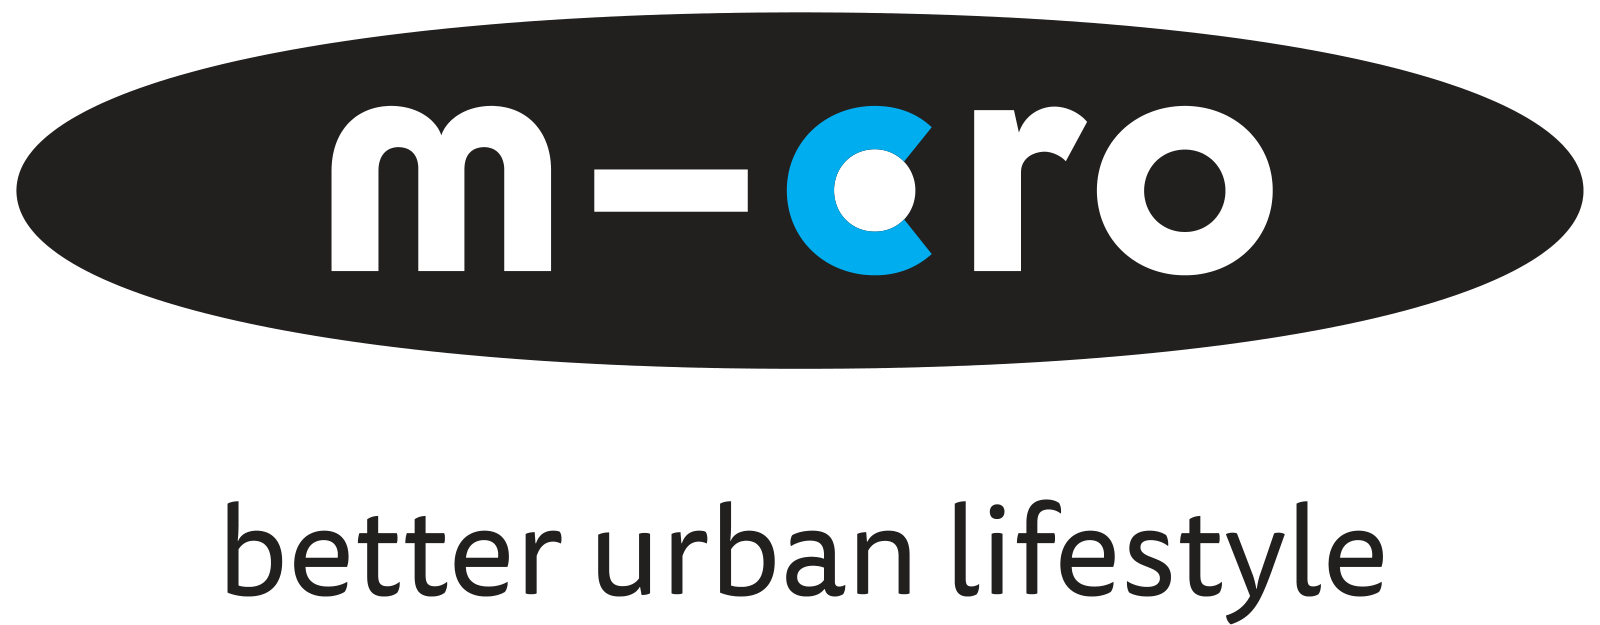 Micro-Mobility- Better Urban Lifestyle 